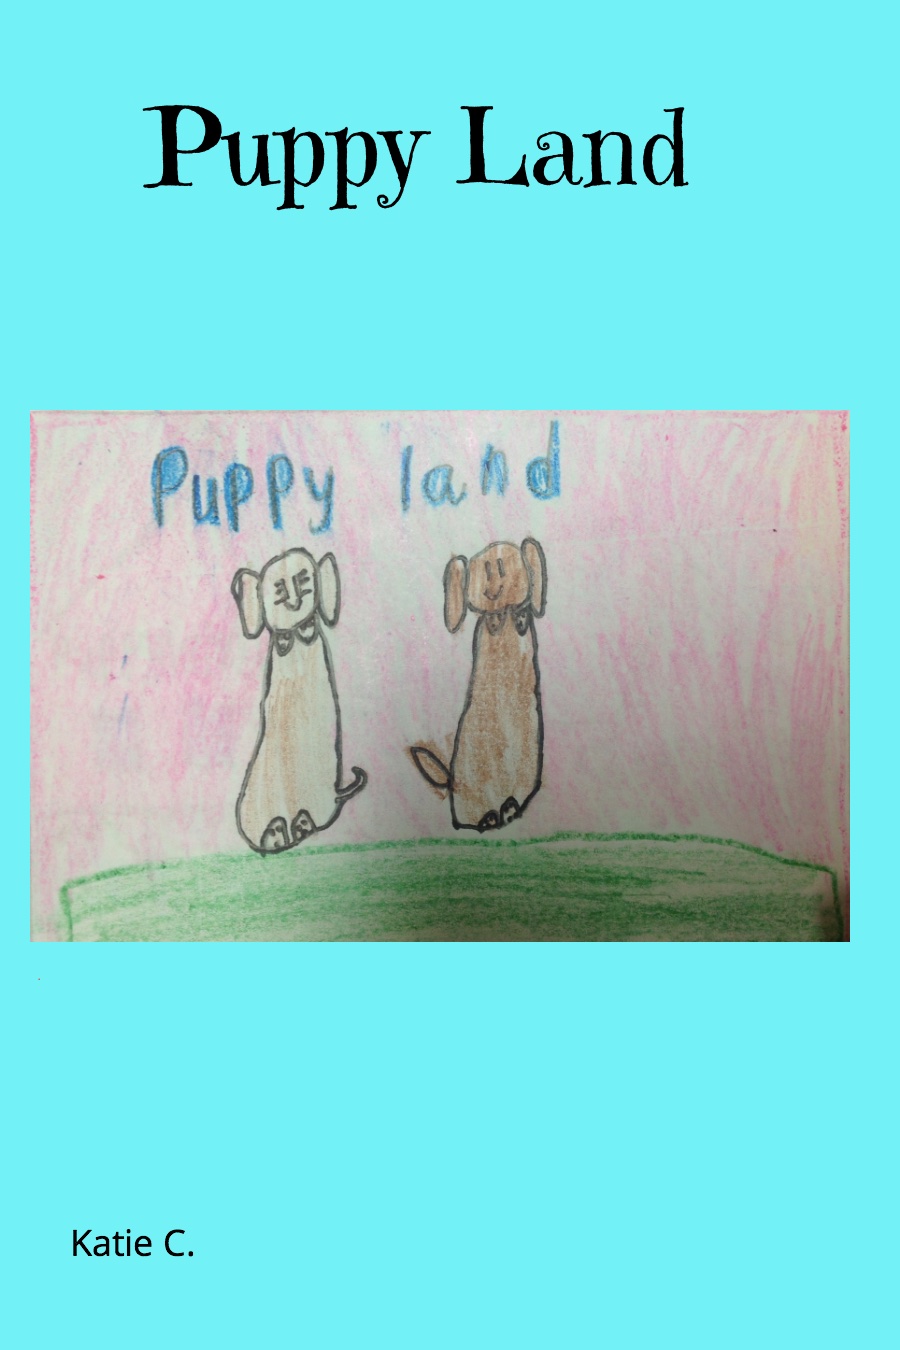 Puppy Land by Katie C_Catherine B